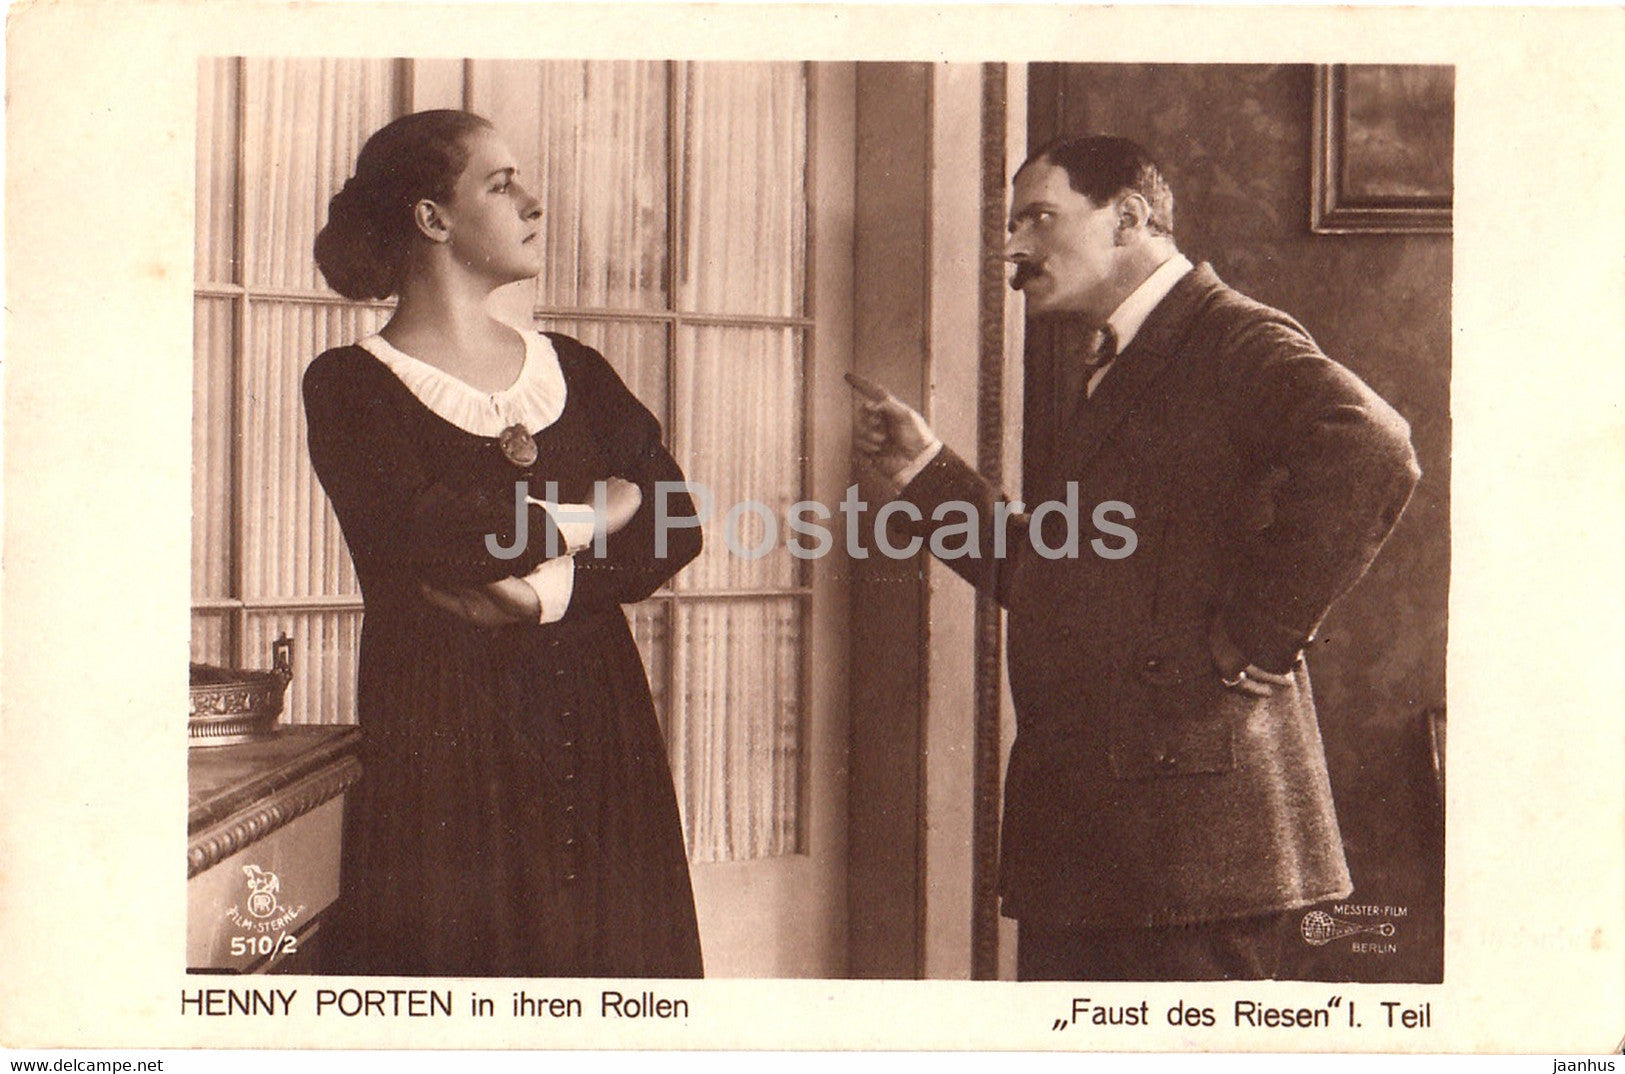 German actress Henny Porten in Ihren Rollen - Faust des Riesen - Film - Movie - 510 - Germany - old postcard - unused - JH Postcards